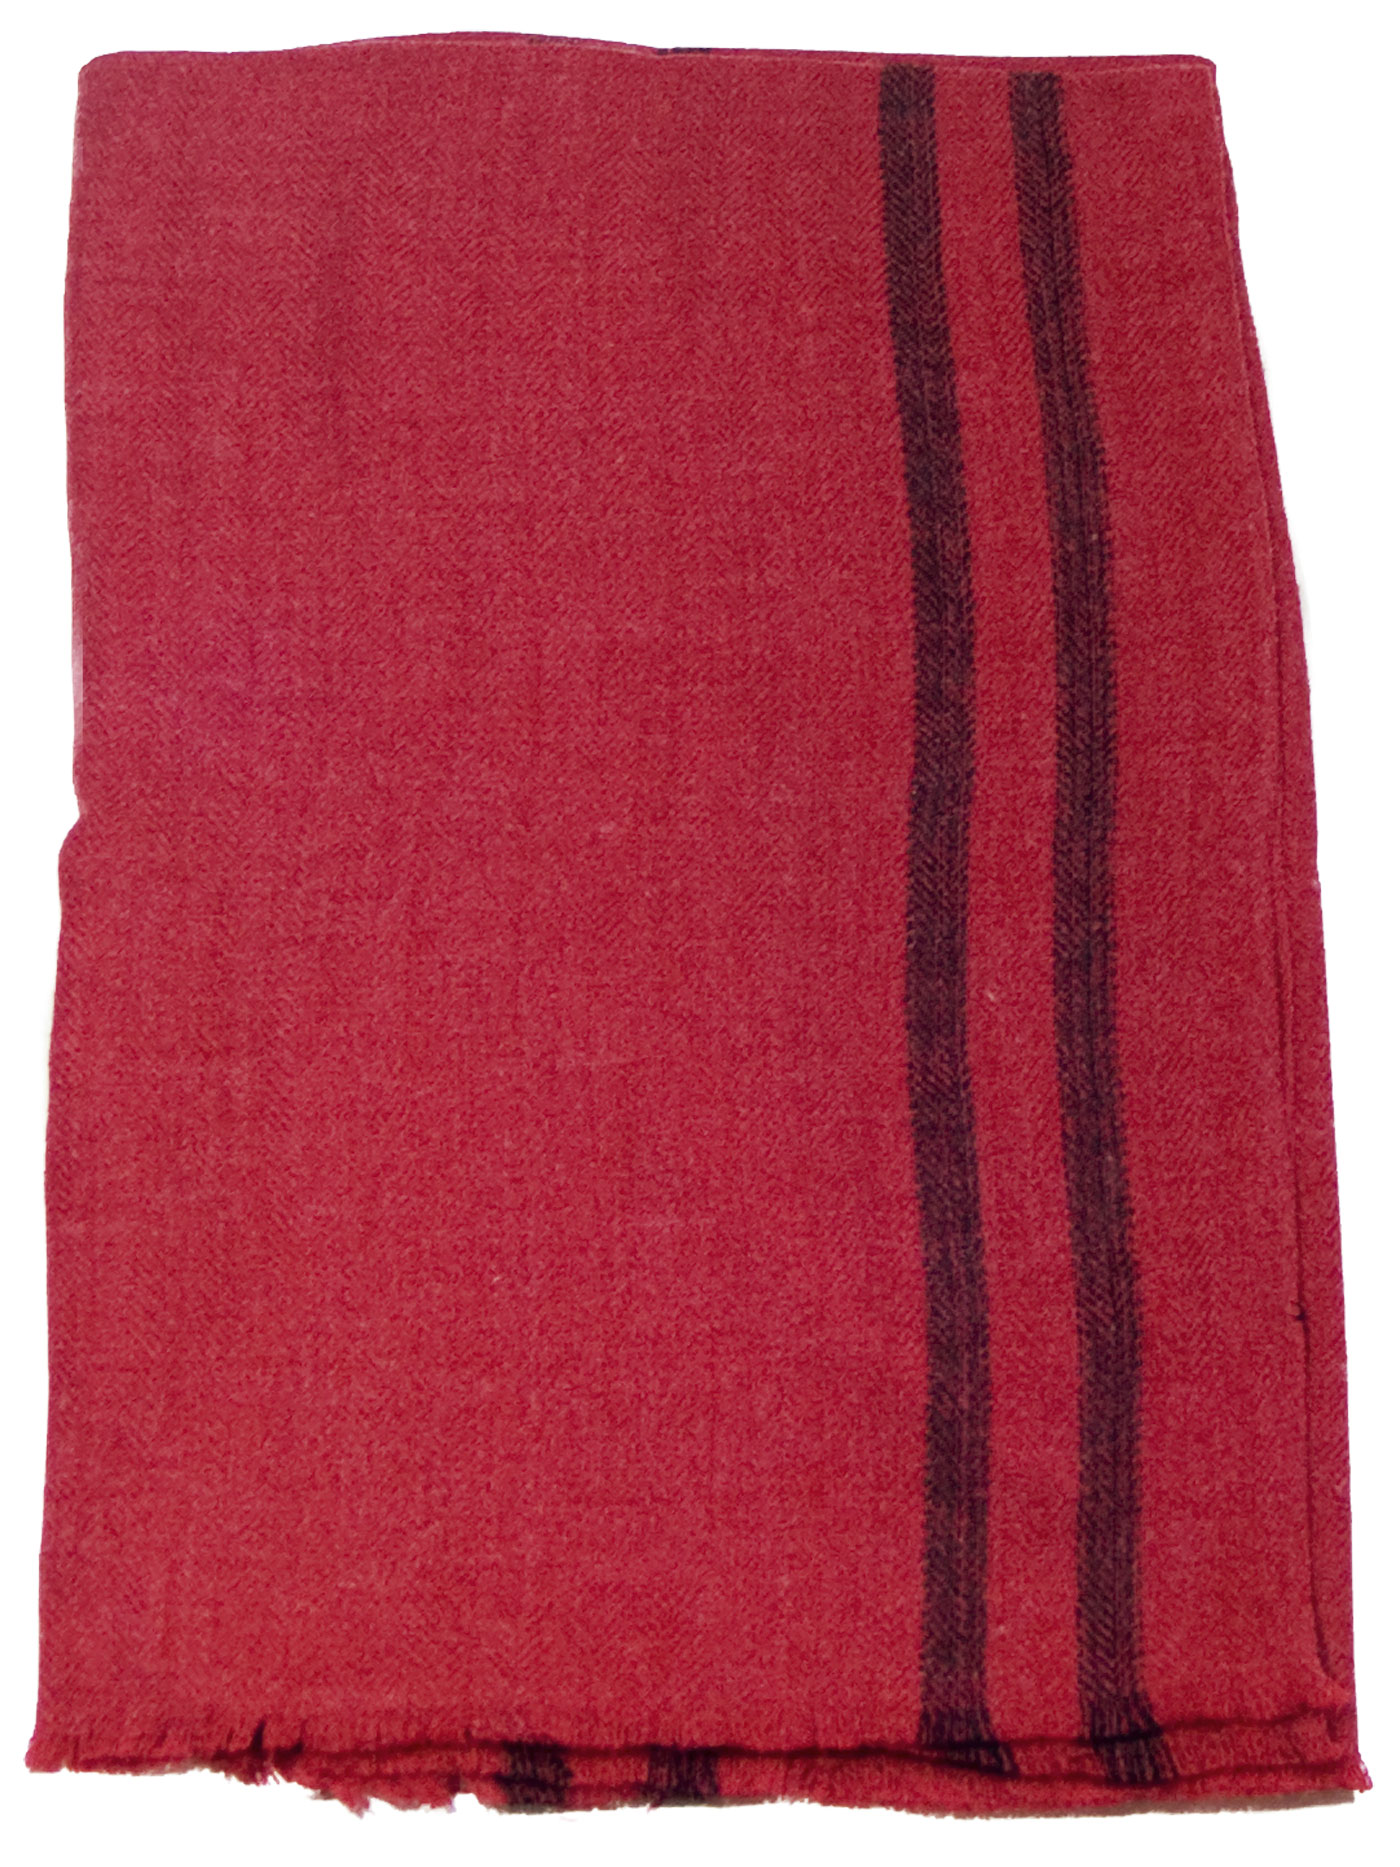 étole femme rouge laine fine rayures 1